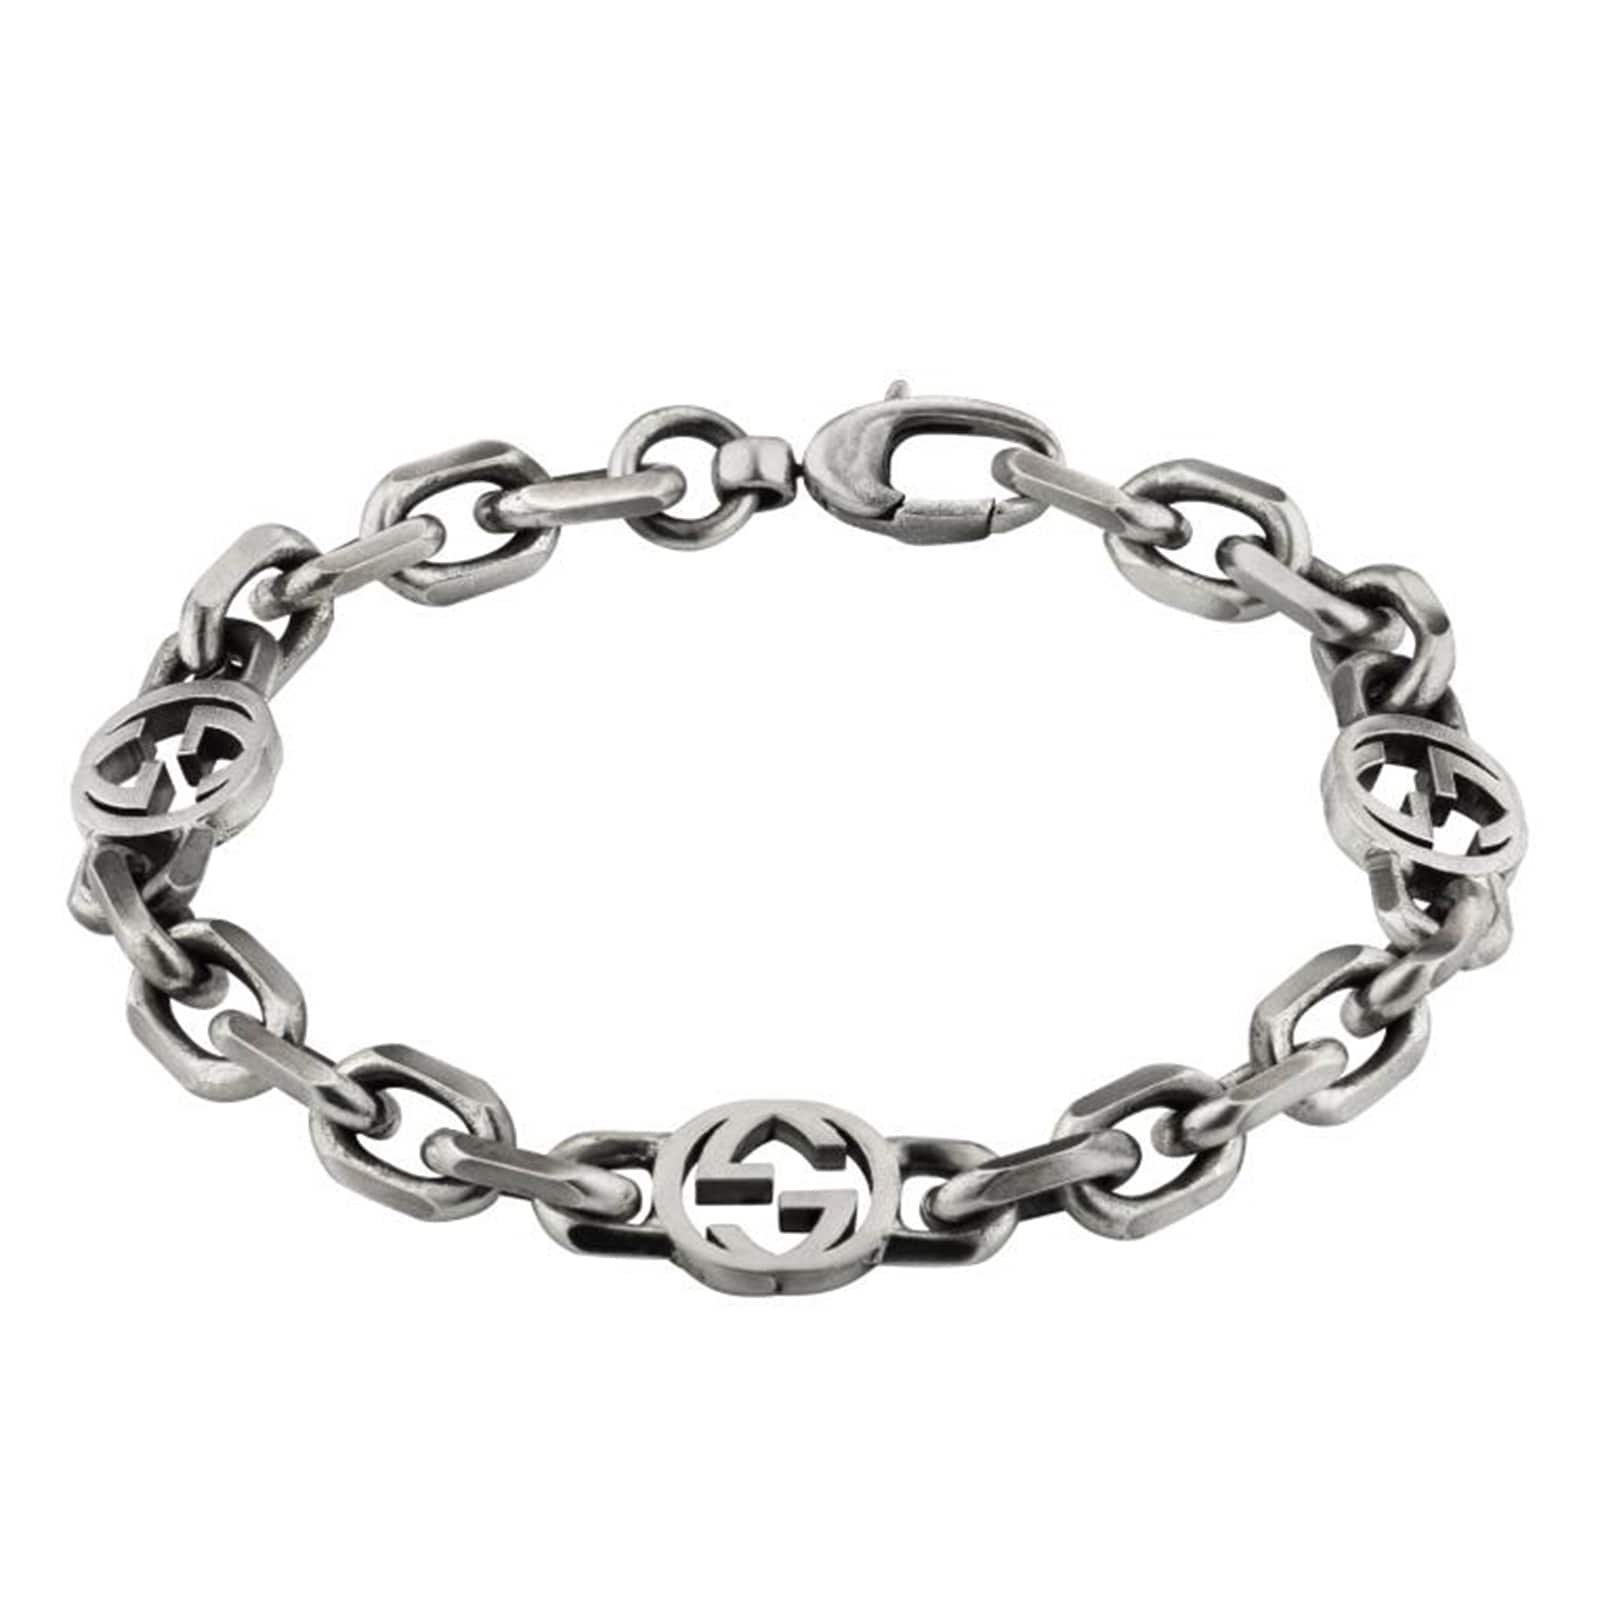 Silver Interlocking G Bracelet - 19cm